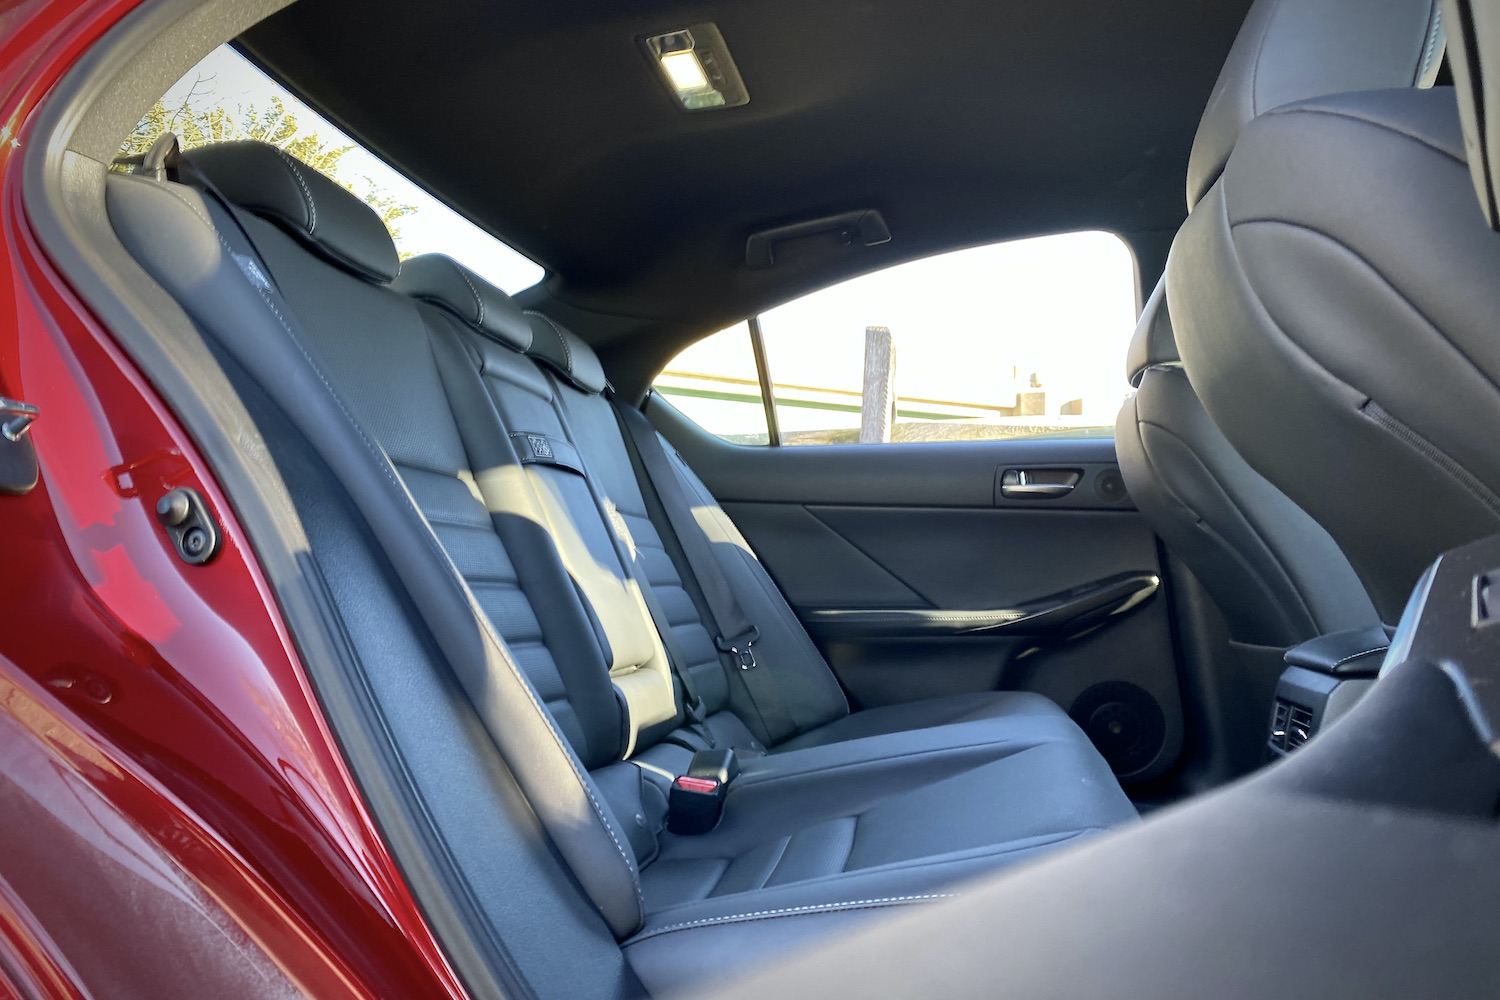 Side view of rear seats in Lexus IS 500 from passenger's side.